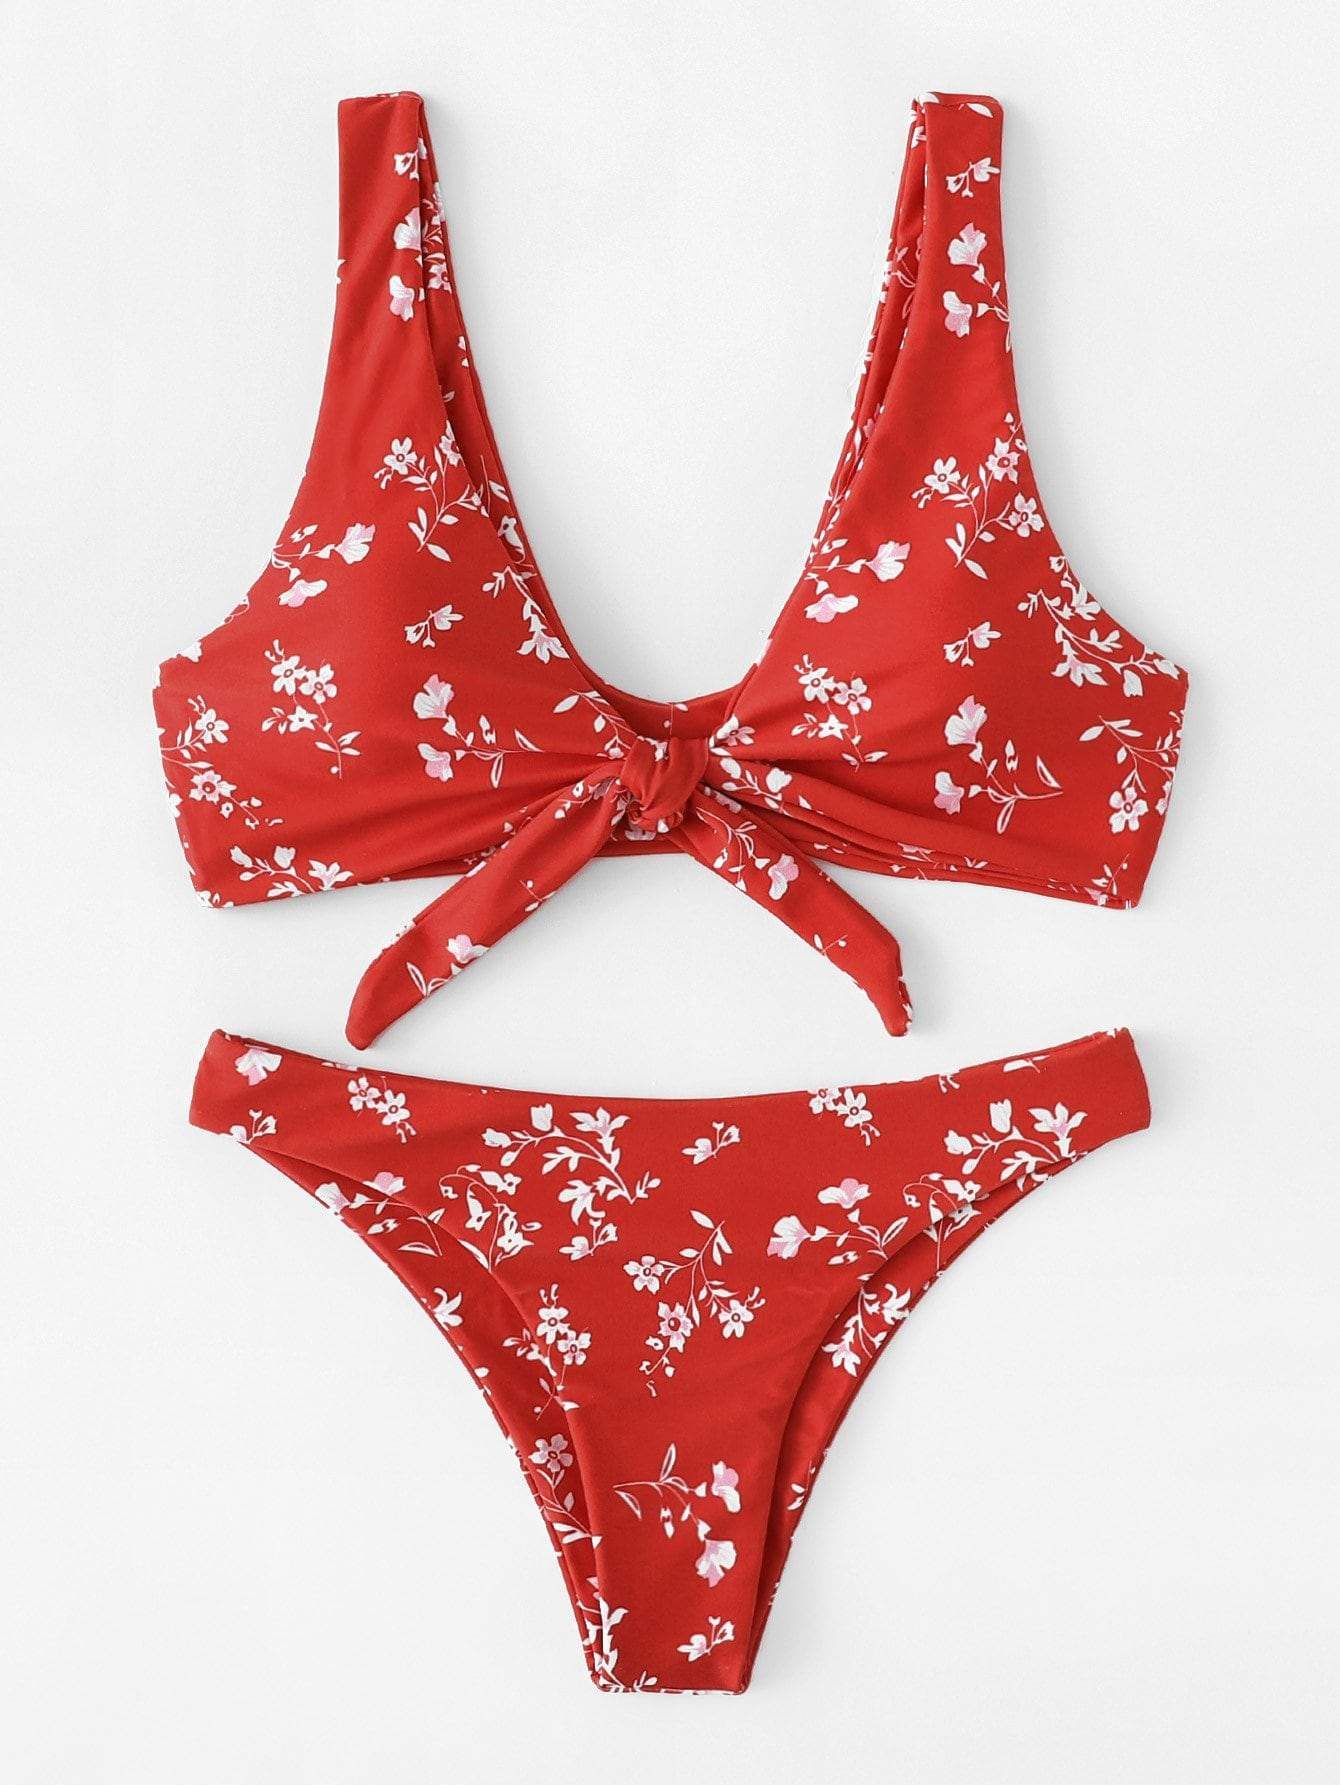 Knot Front Calico Print Bikini Set -   14 holiday Style bathing suits ideas